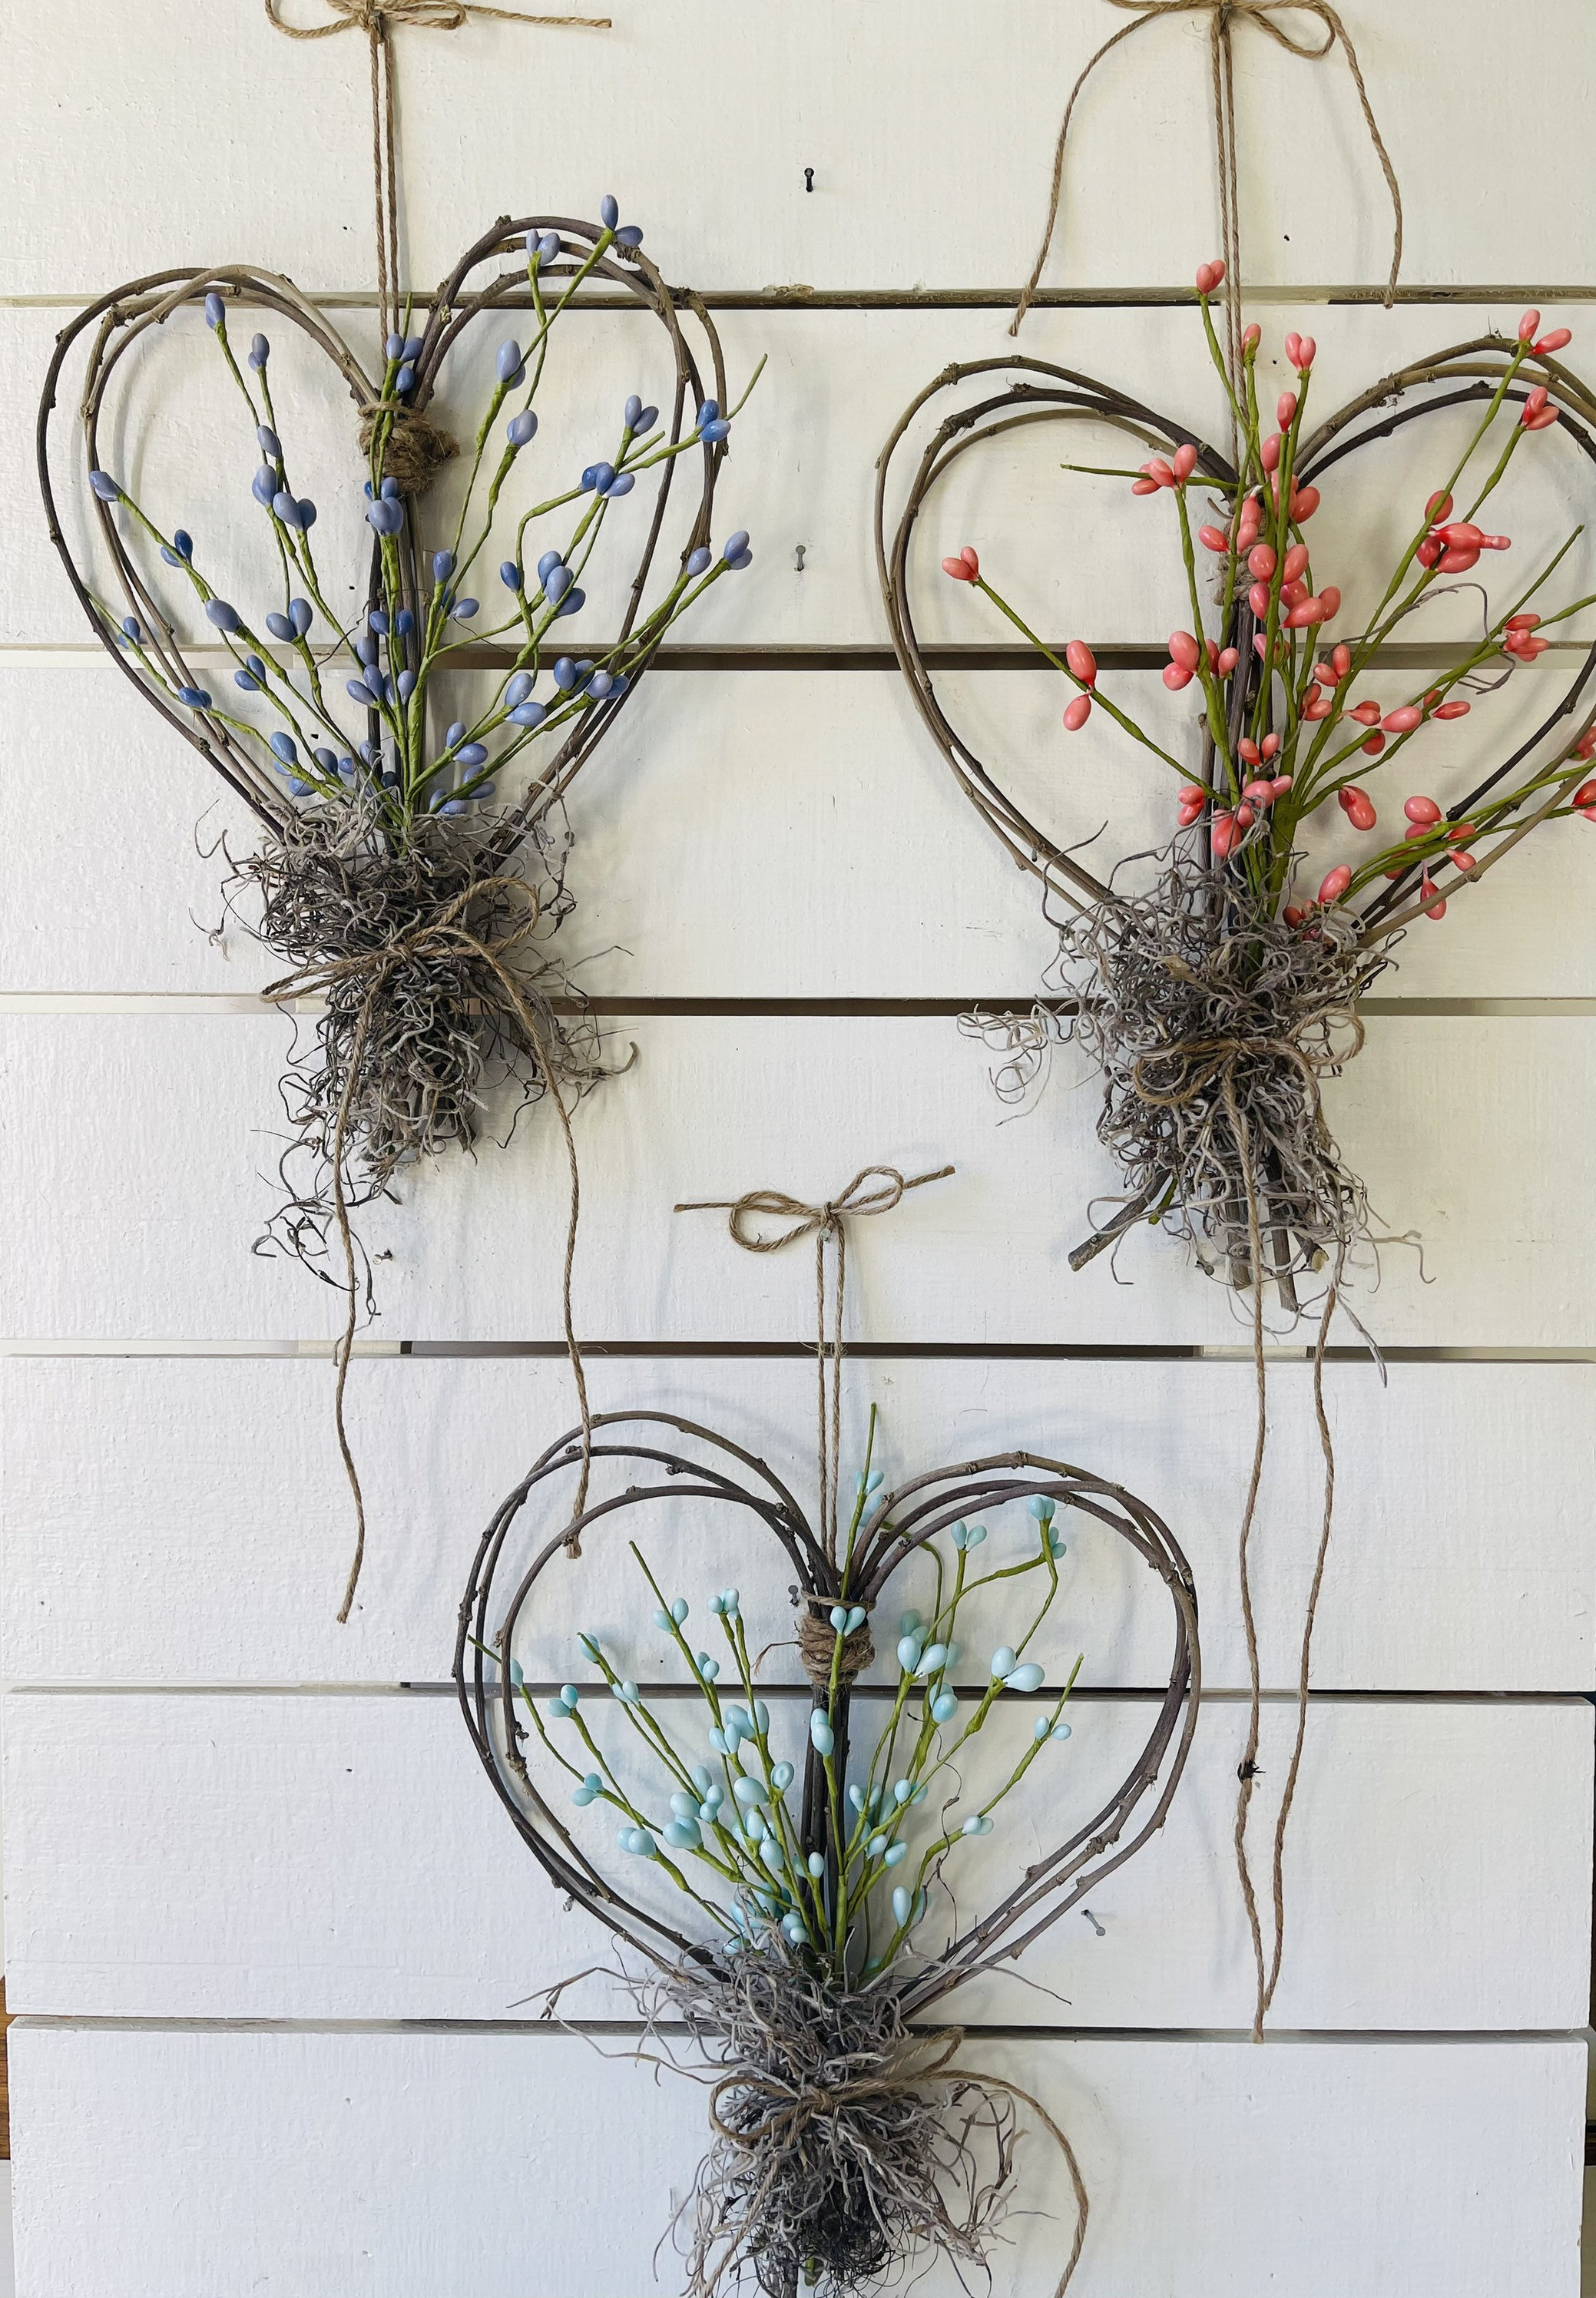 30CM Rattan Heart Wreath Form-12 Inch Rattan Wicker Wreath Heart Shaped DIY  Grapevine Mesh Wreath fo…See more 30CM Rattan Heart Wreath Form-12 Inch